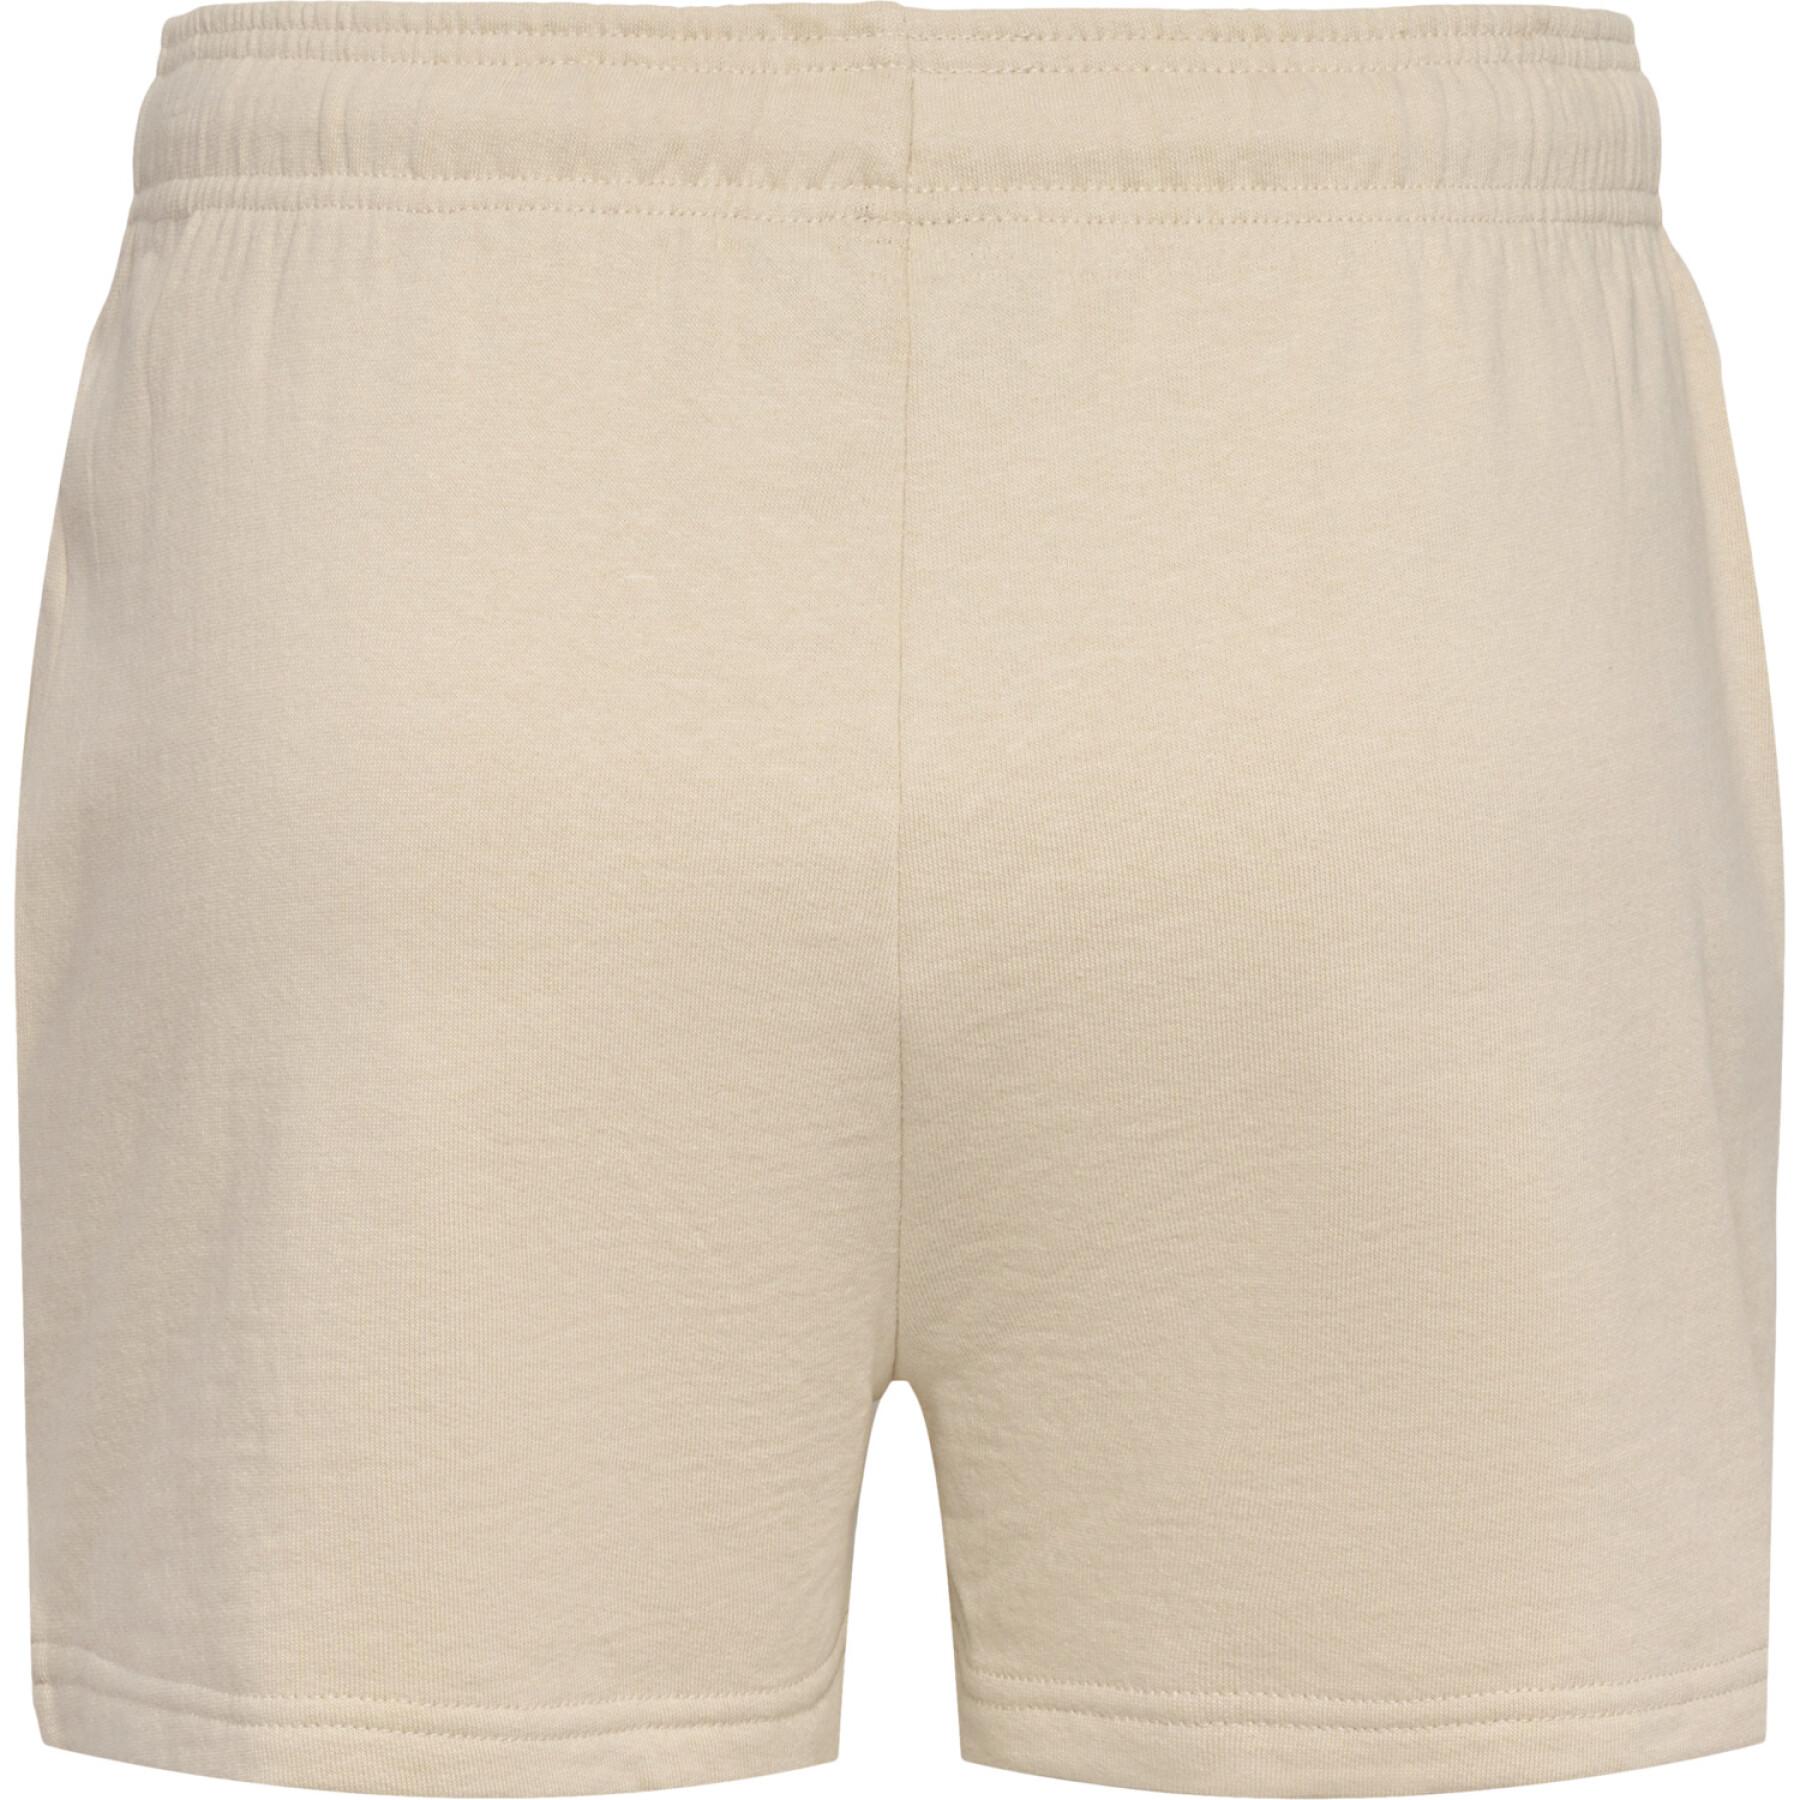 Women's shorts Hummel Legacy - Skirts & Shorts - Clothing - Women